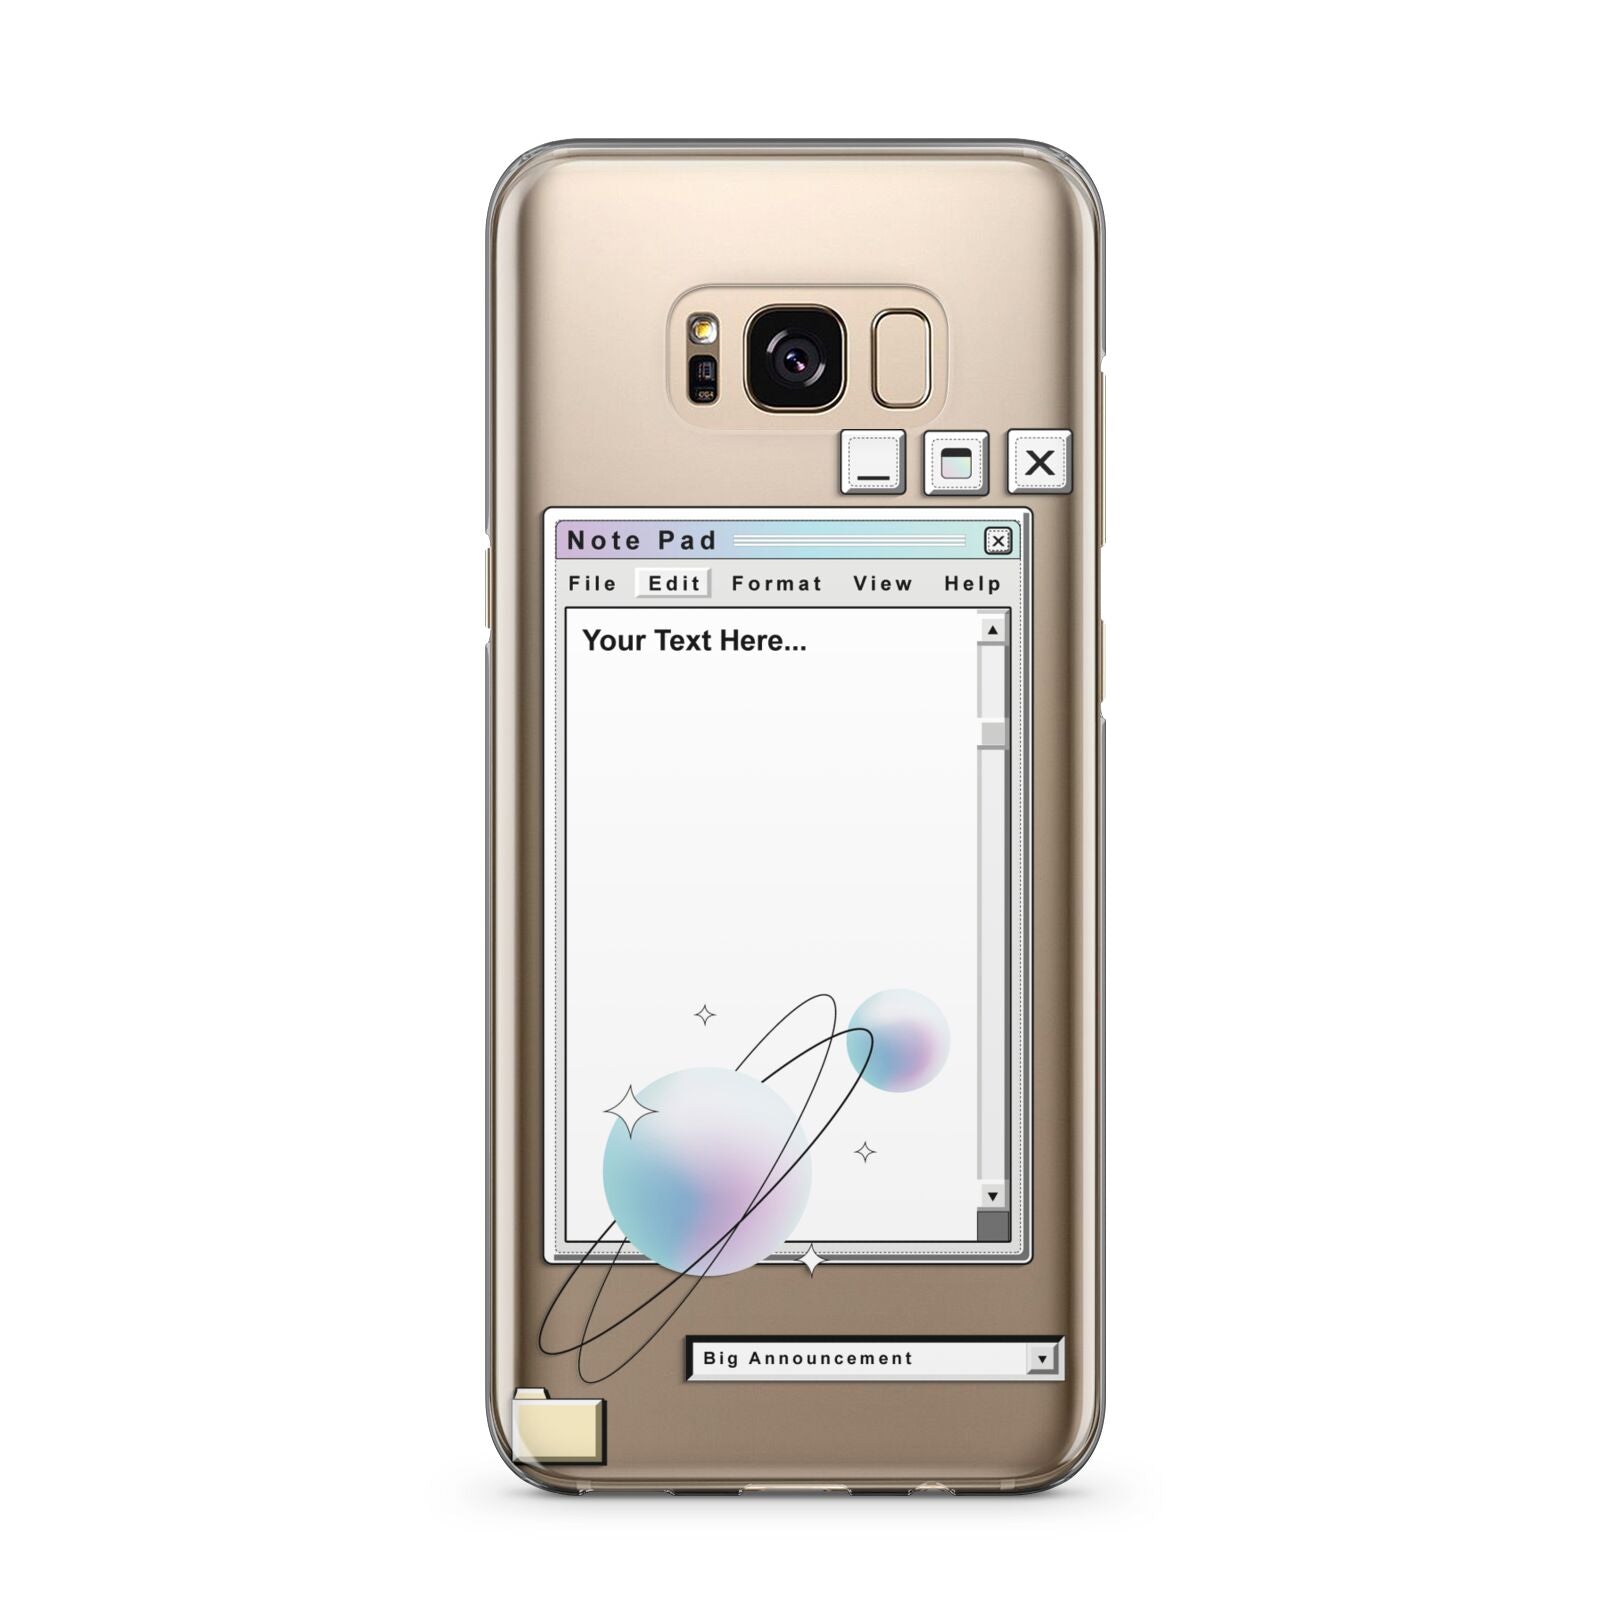 Retro Note Pad Samsung Galaxy S8 Plus Case